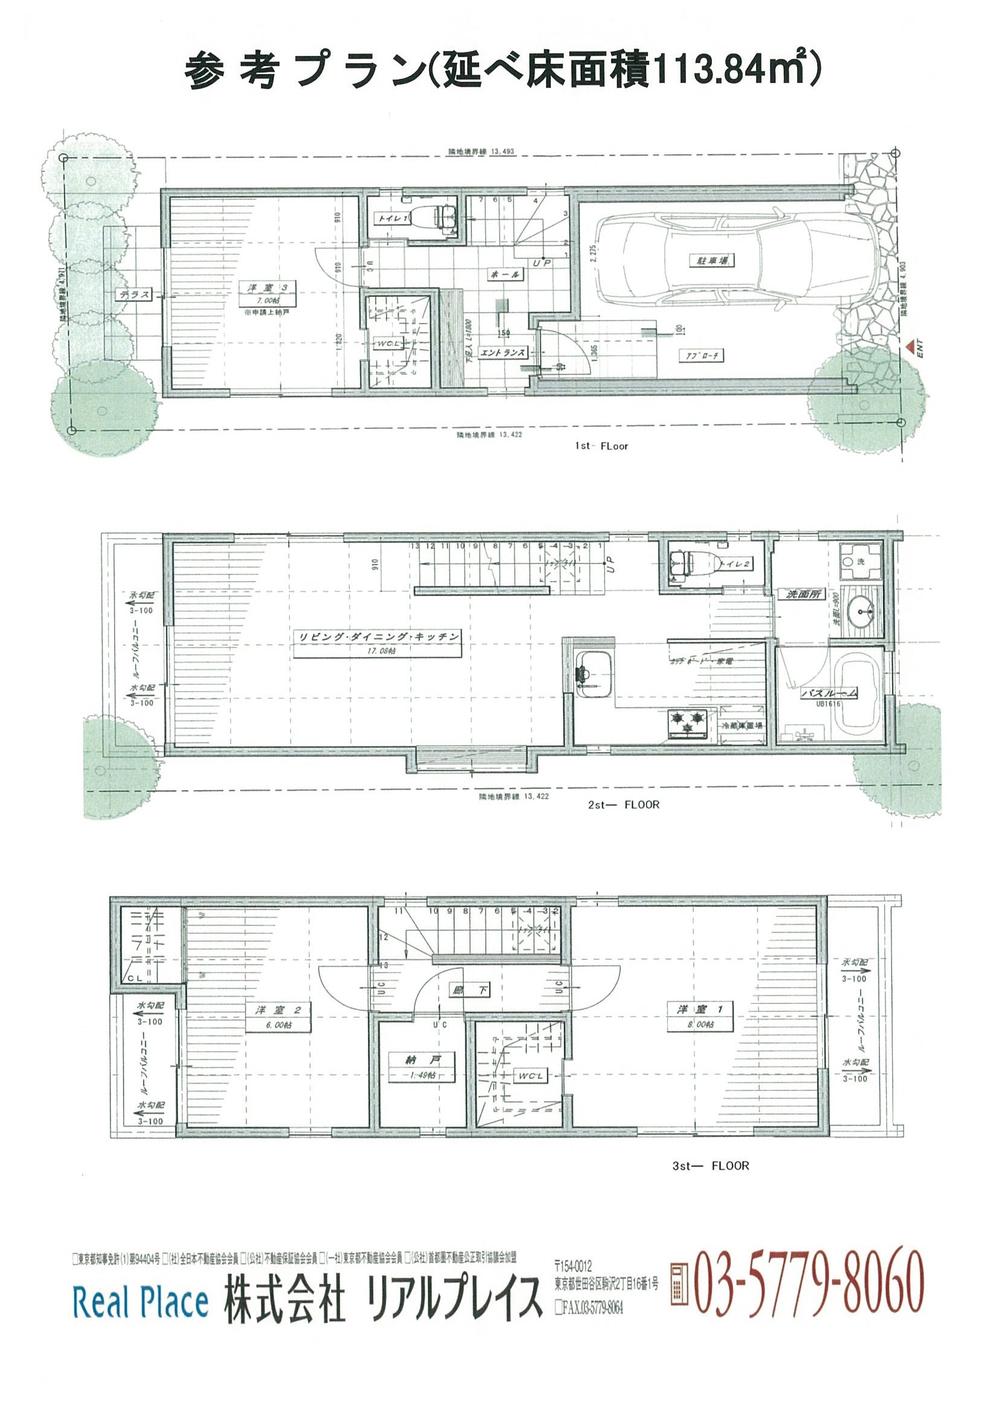 Building plan example (floor plan). Building plan example ( Issue land) Building Price     24,100,000 yen, Building area 113.84 sq m